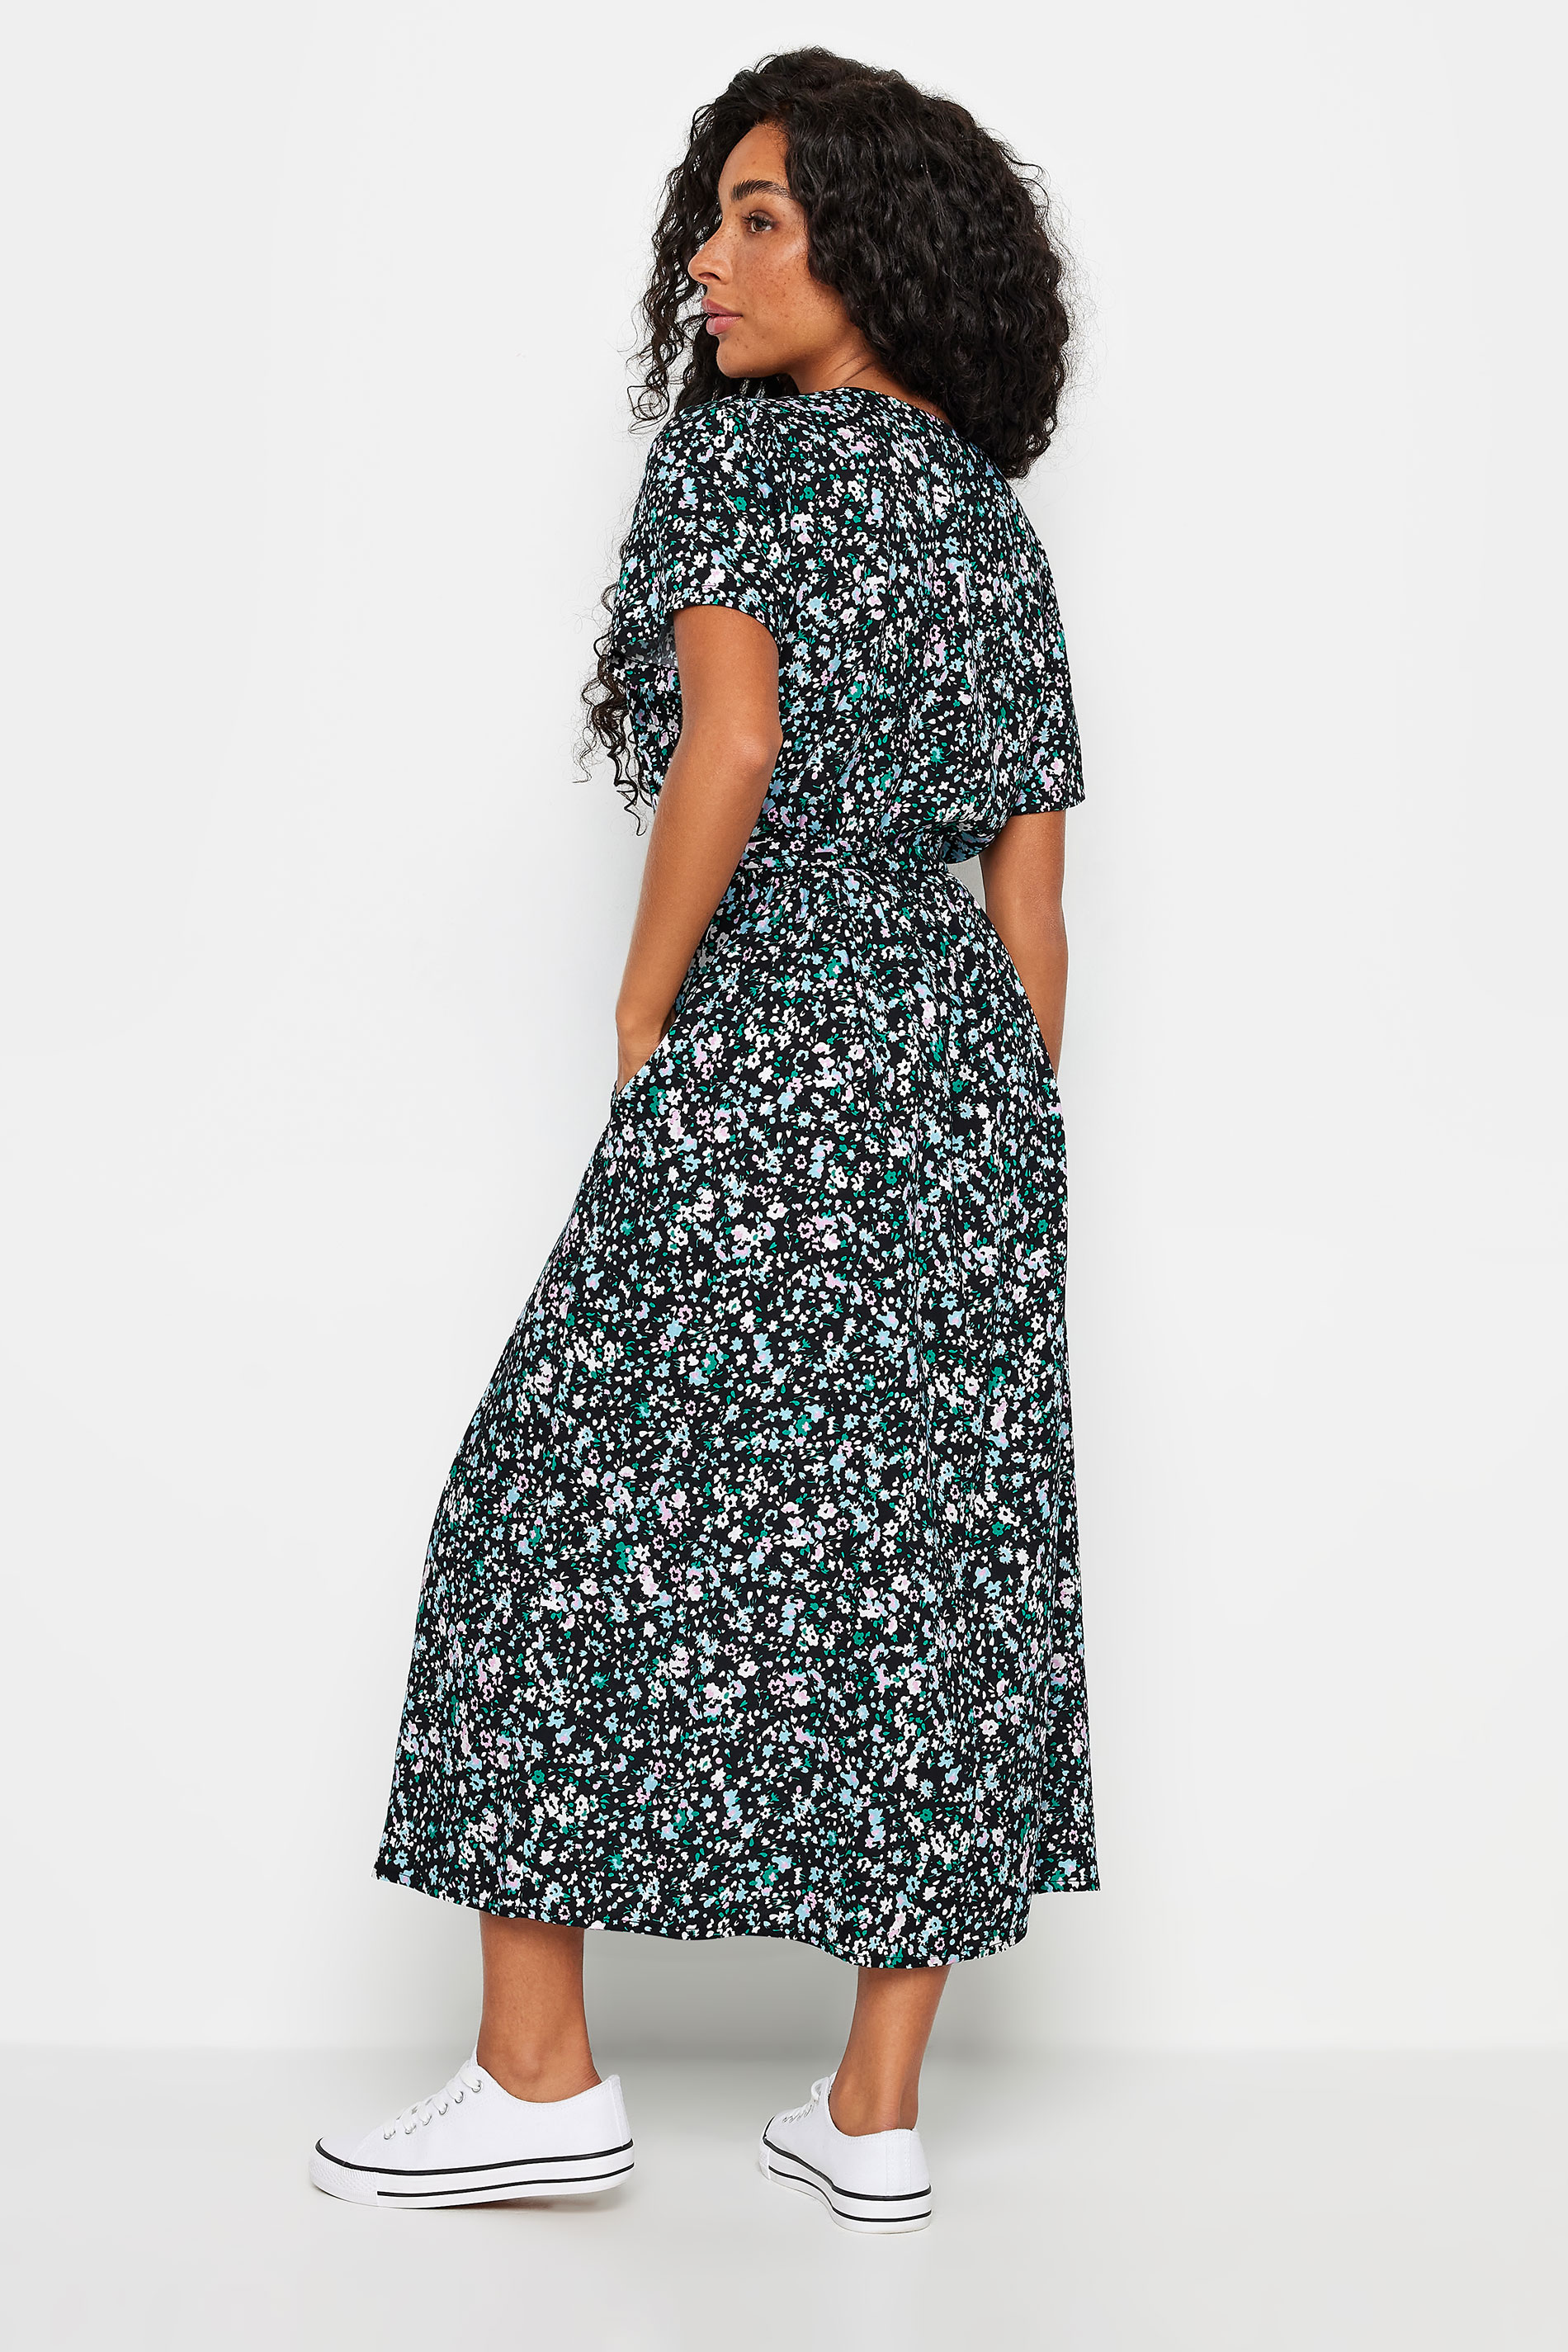 M&Co Petite Black Ditsy Floral Print Button Down Dress | M&Co 3